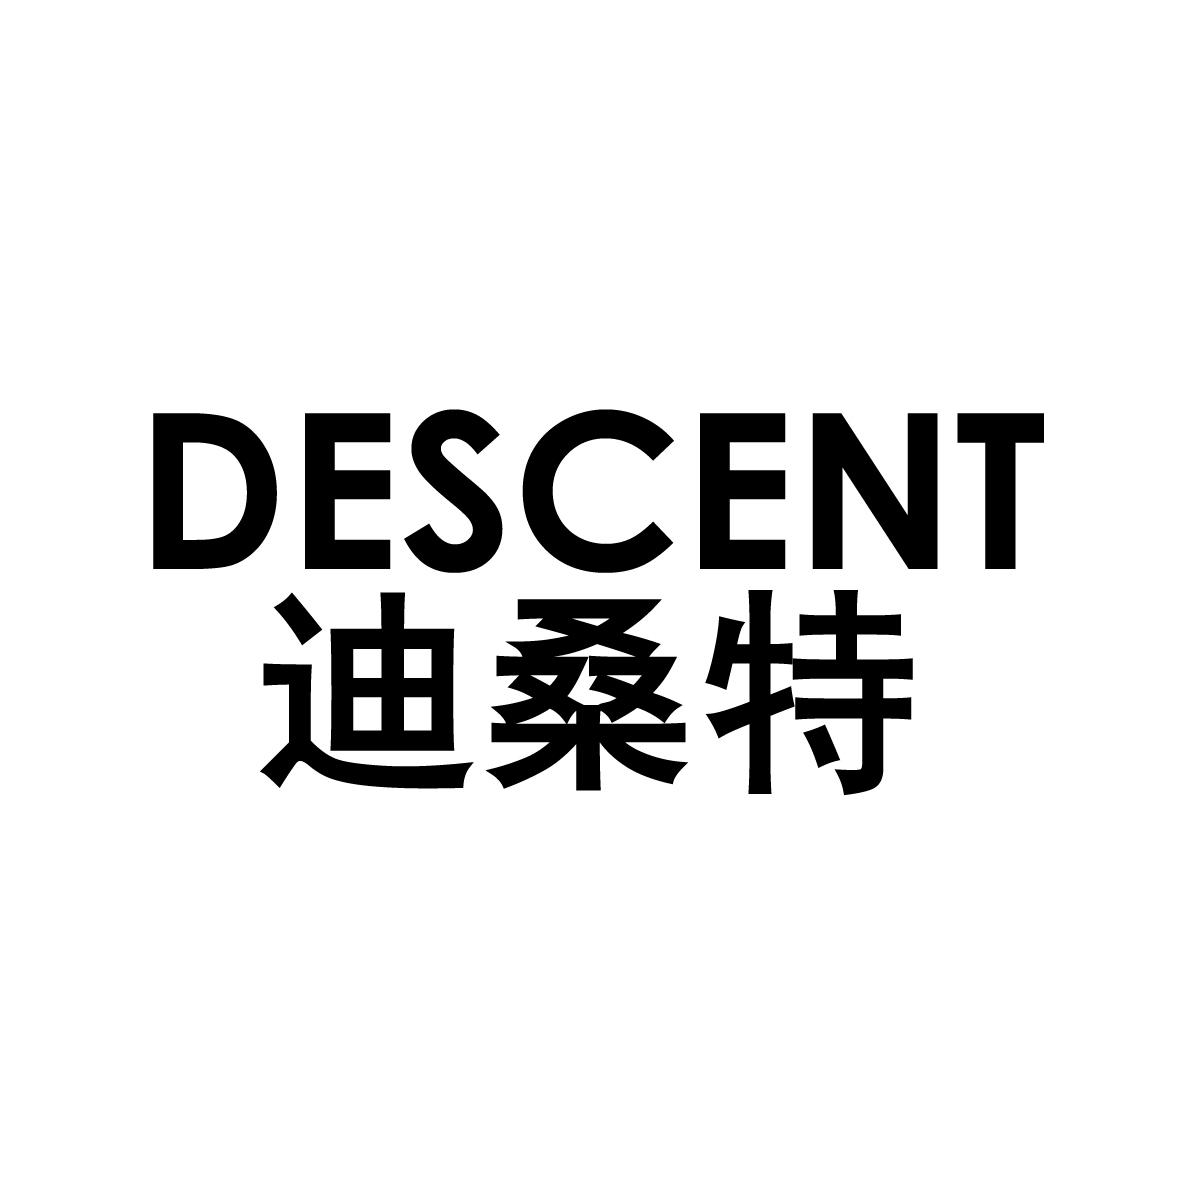 迪桑特  descent注册/申请号:49585750